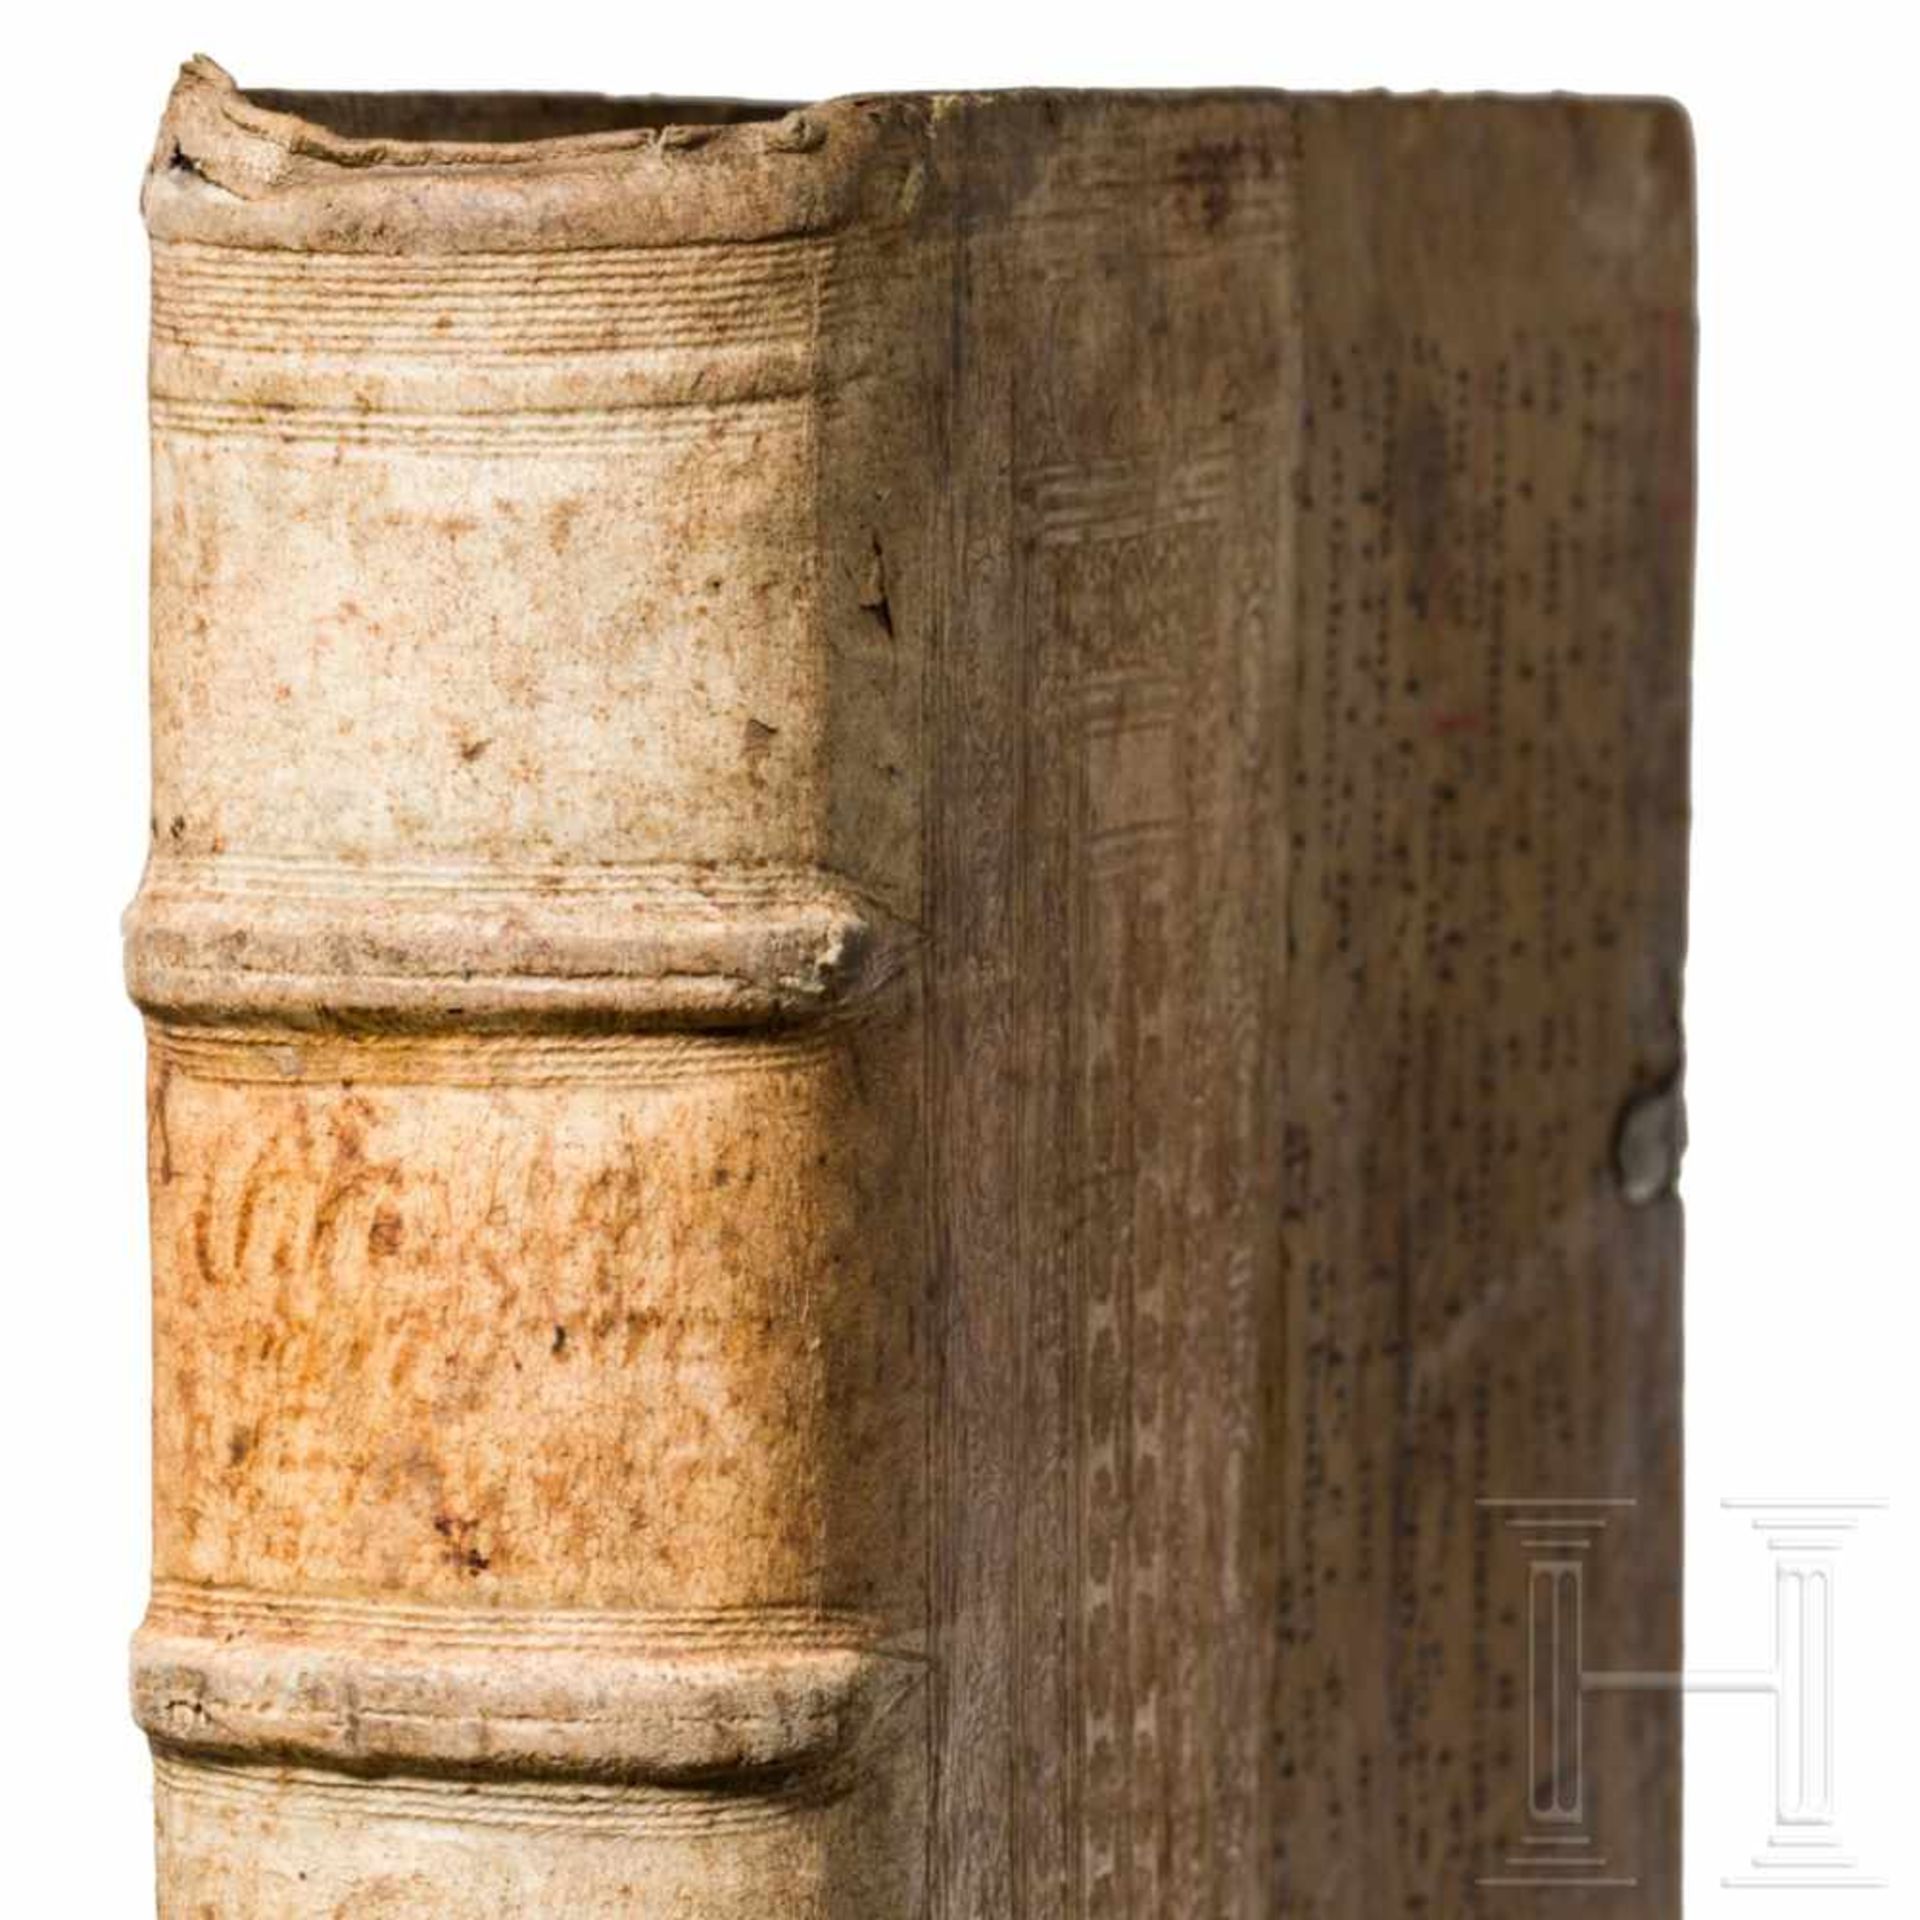 Hartmann Schedel, Das Buch der Chroniken, Nürnberg, A. Koberger, 1493 - Image 12 of 51